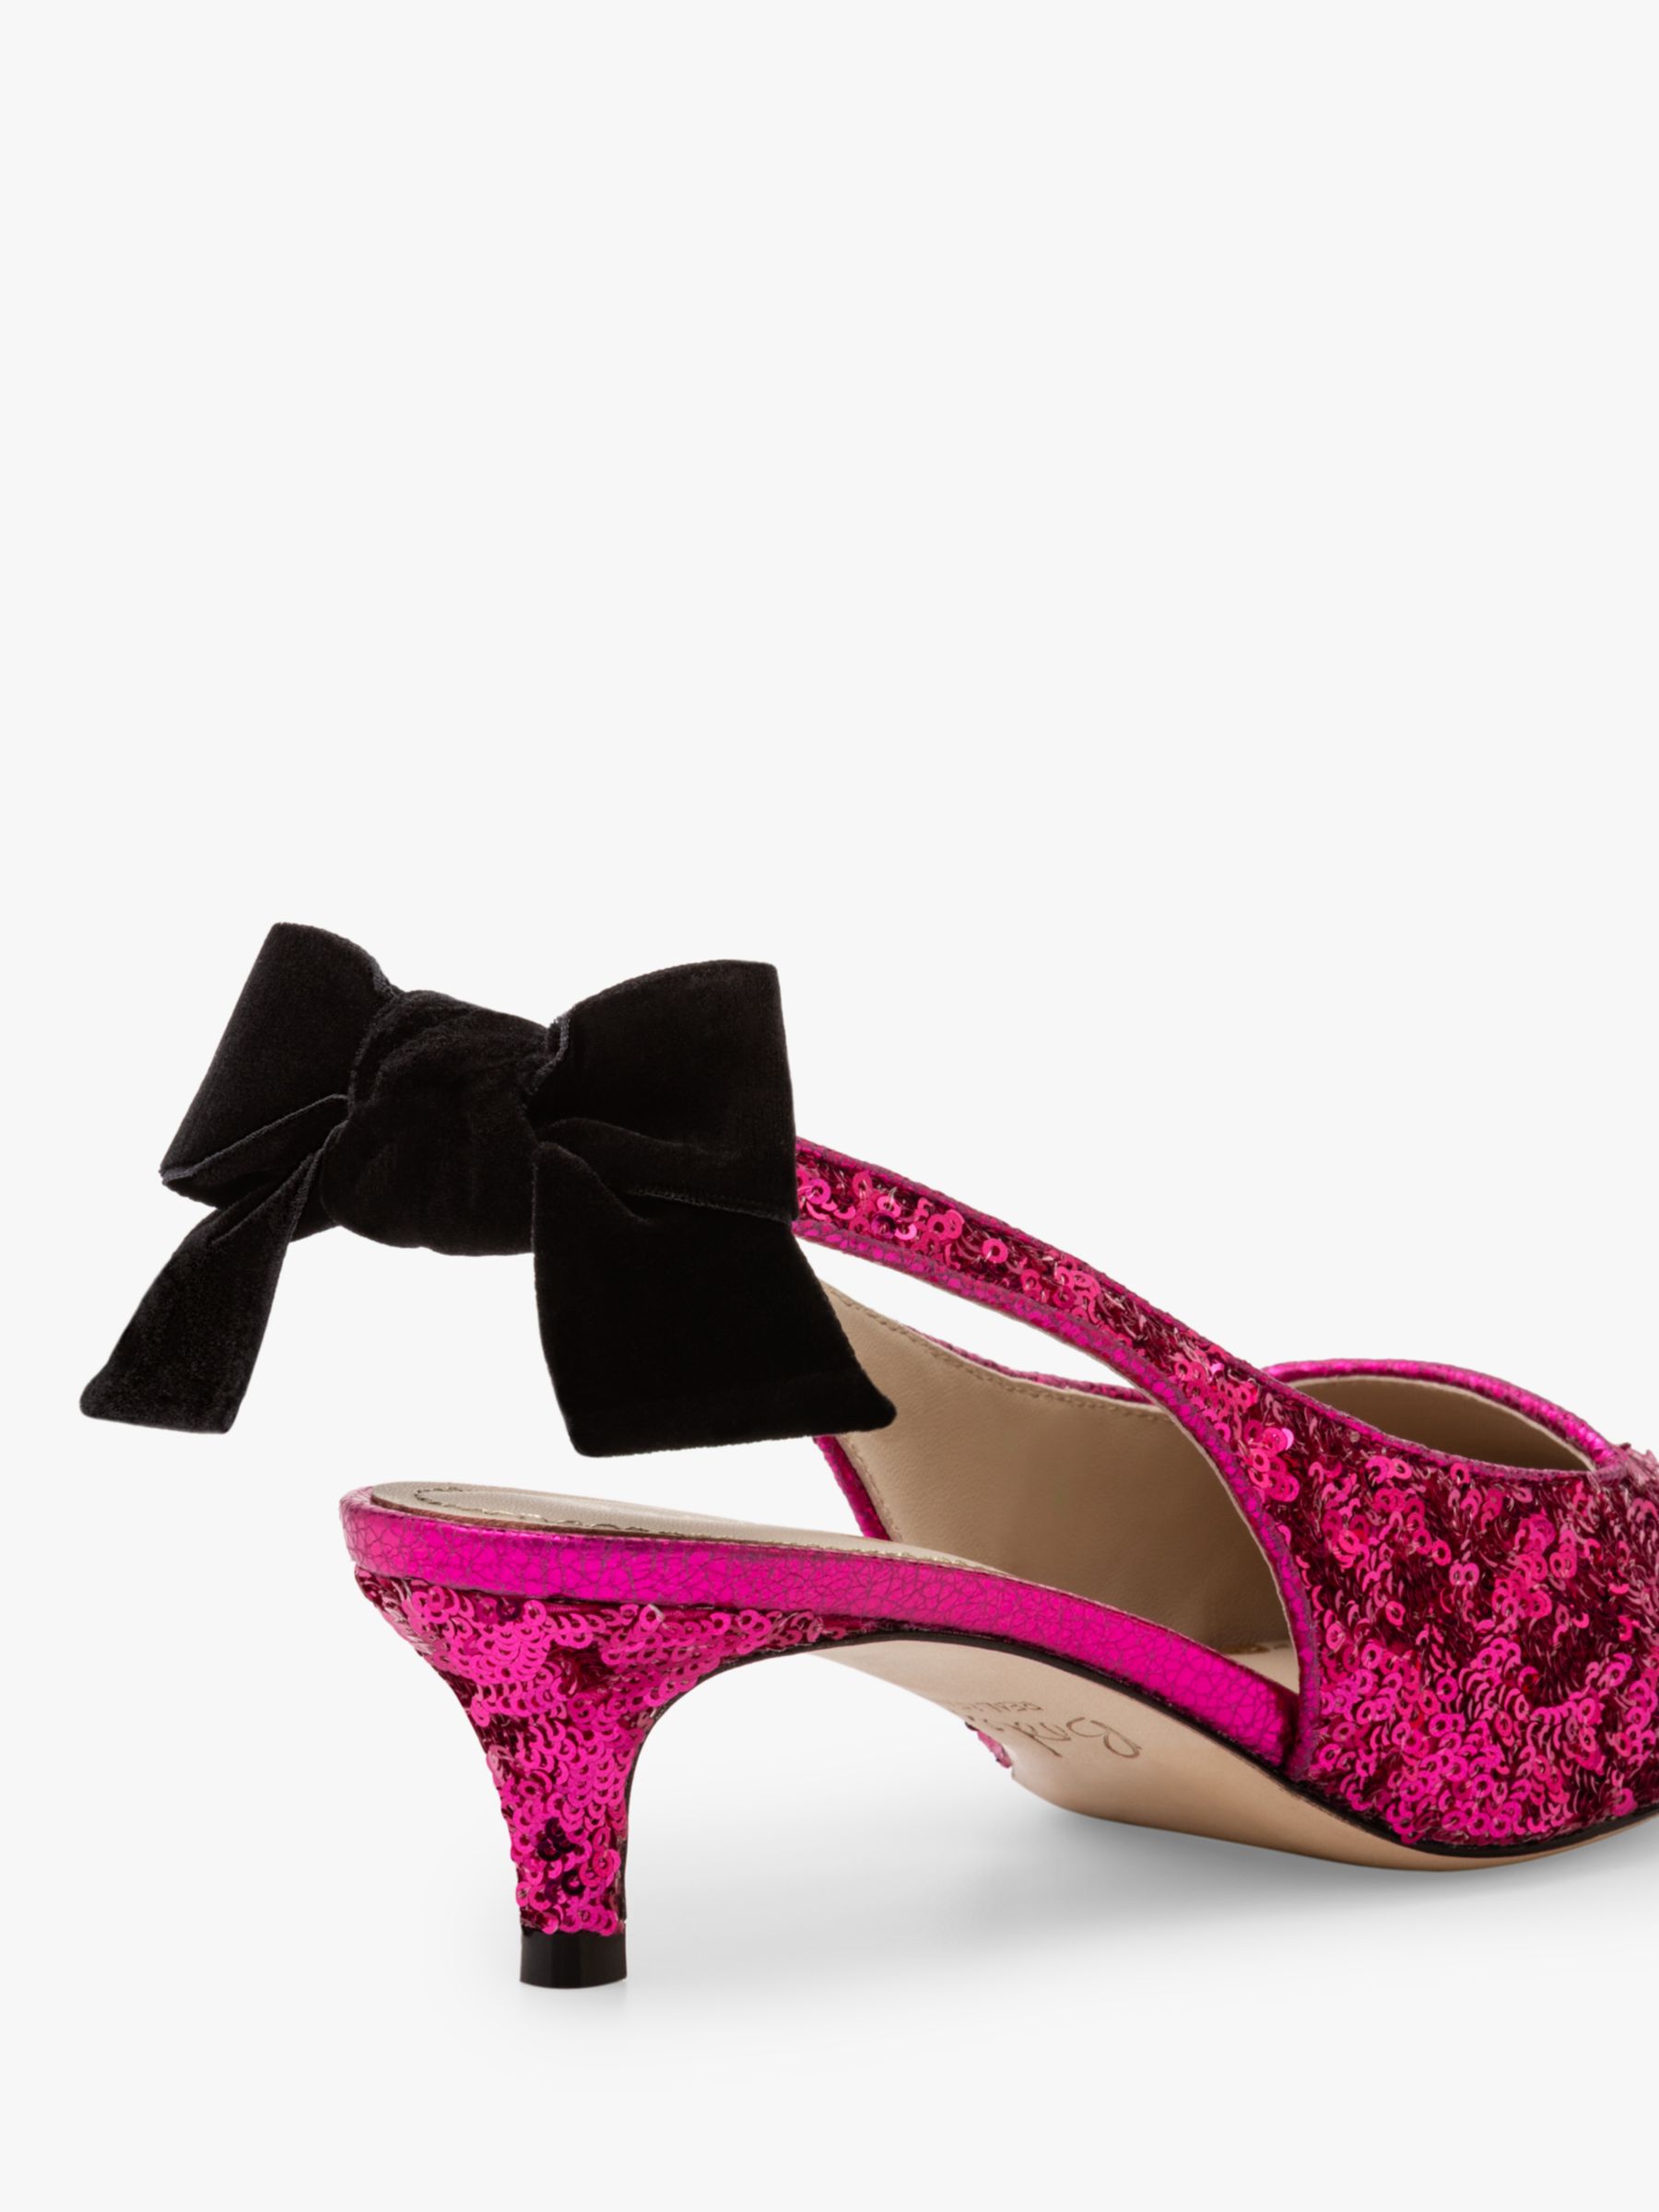 Boden Antonia Glitter Slingback Shoes, Pink Flambé at John Lewis & Partners